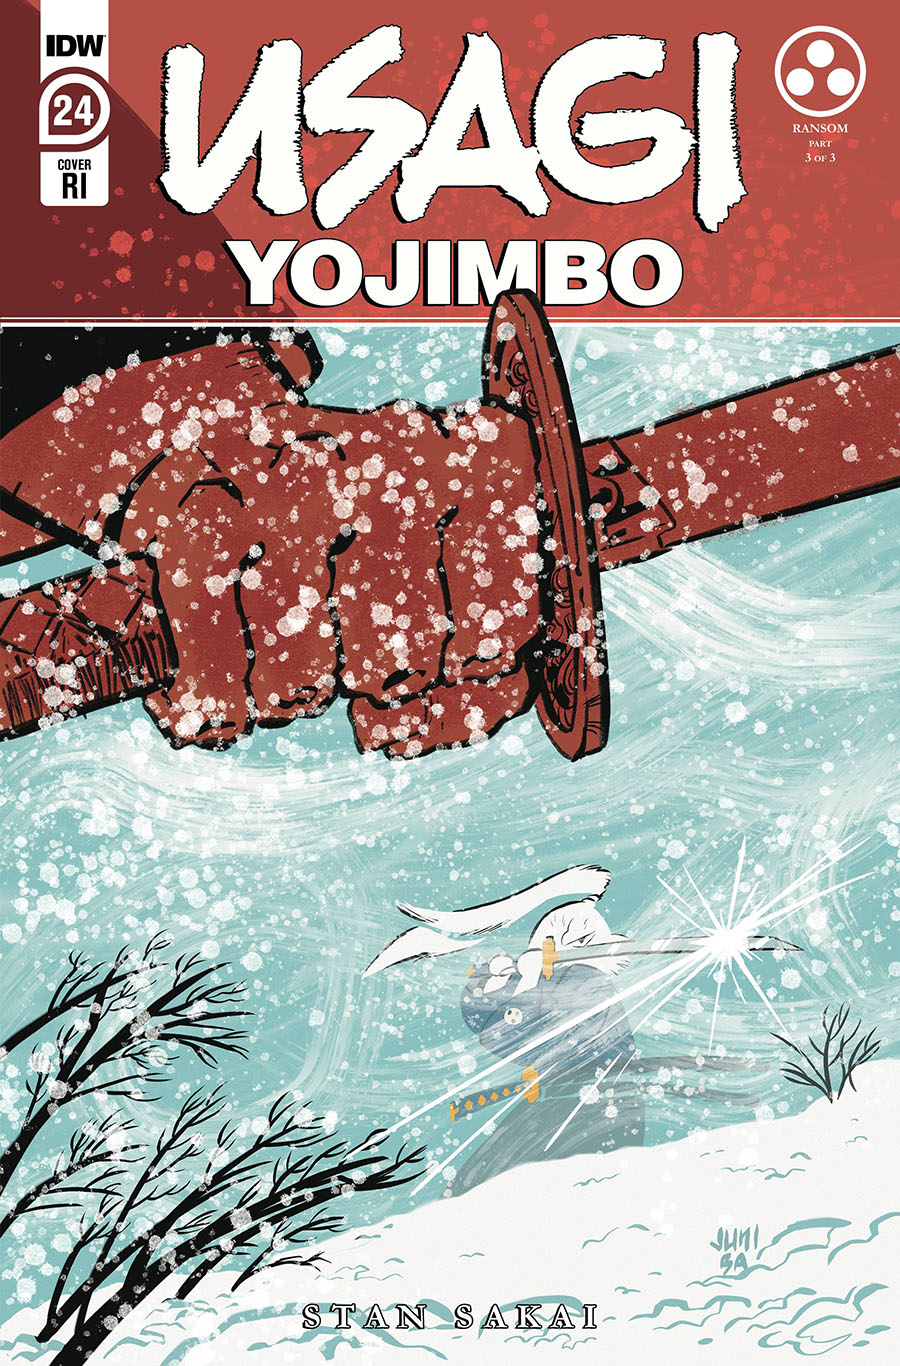 Usagi Yojimbo Vol 4 #24 Cover B Incentive Juni Ba Variant Cover